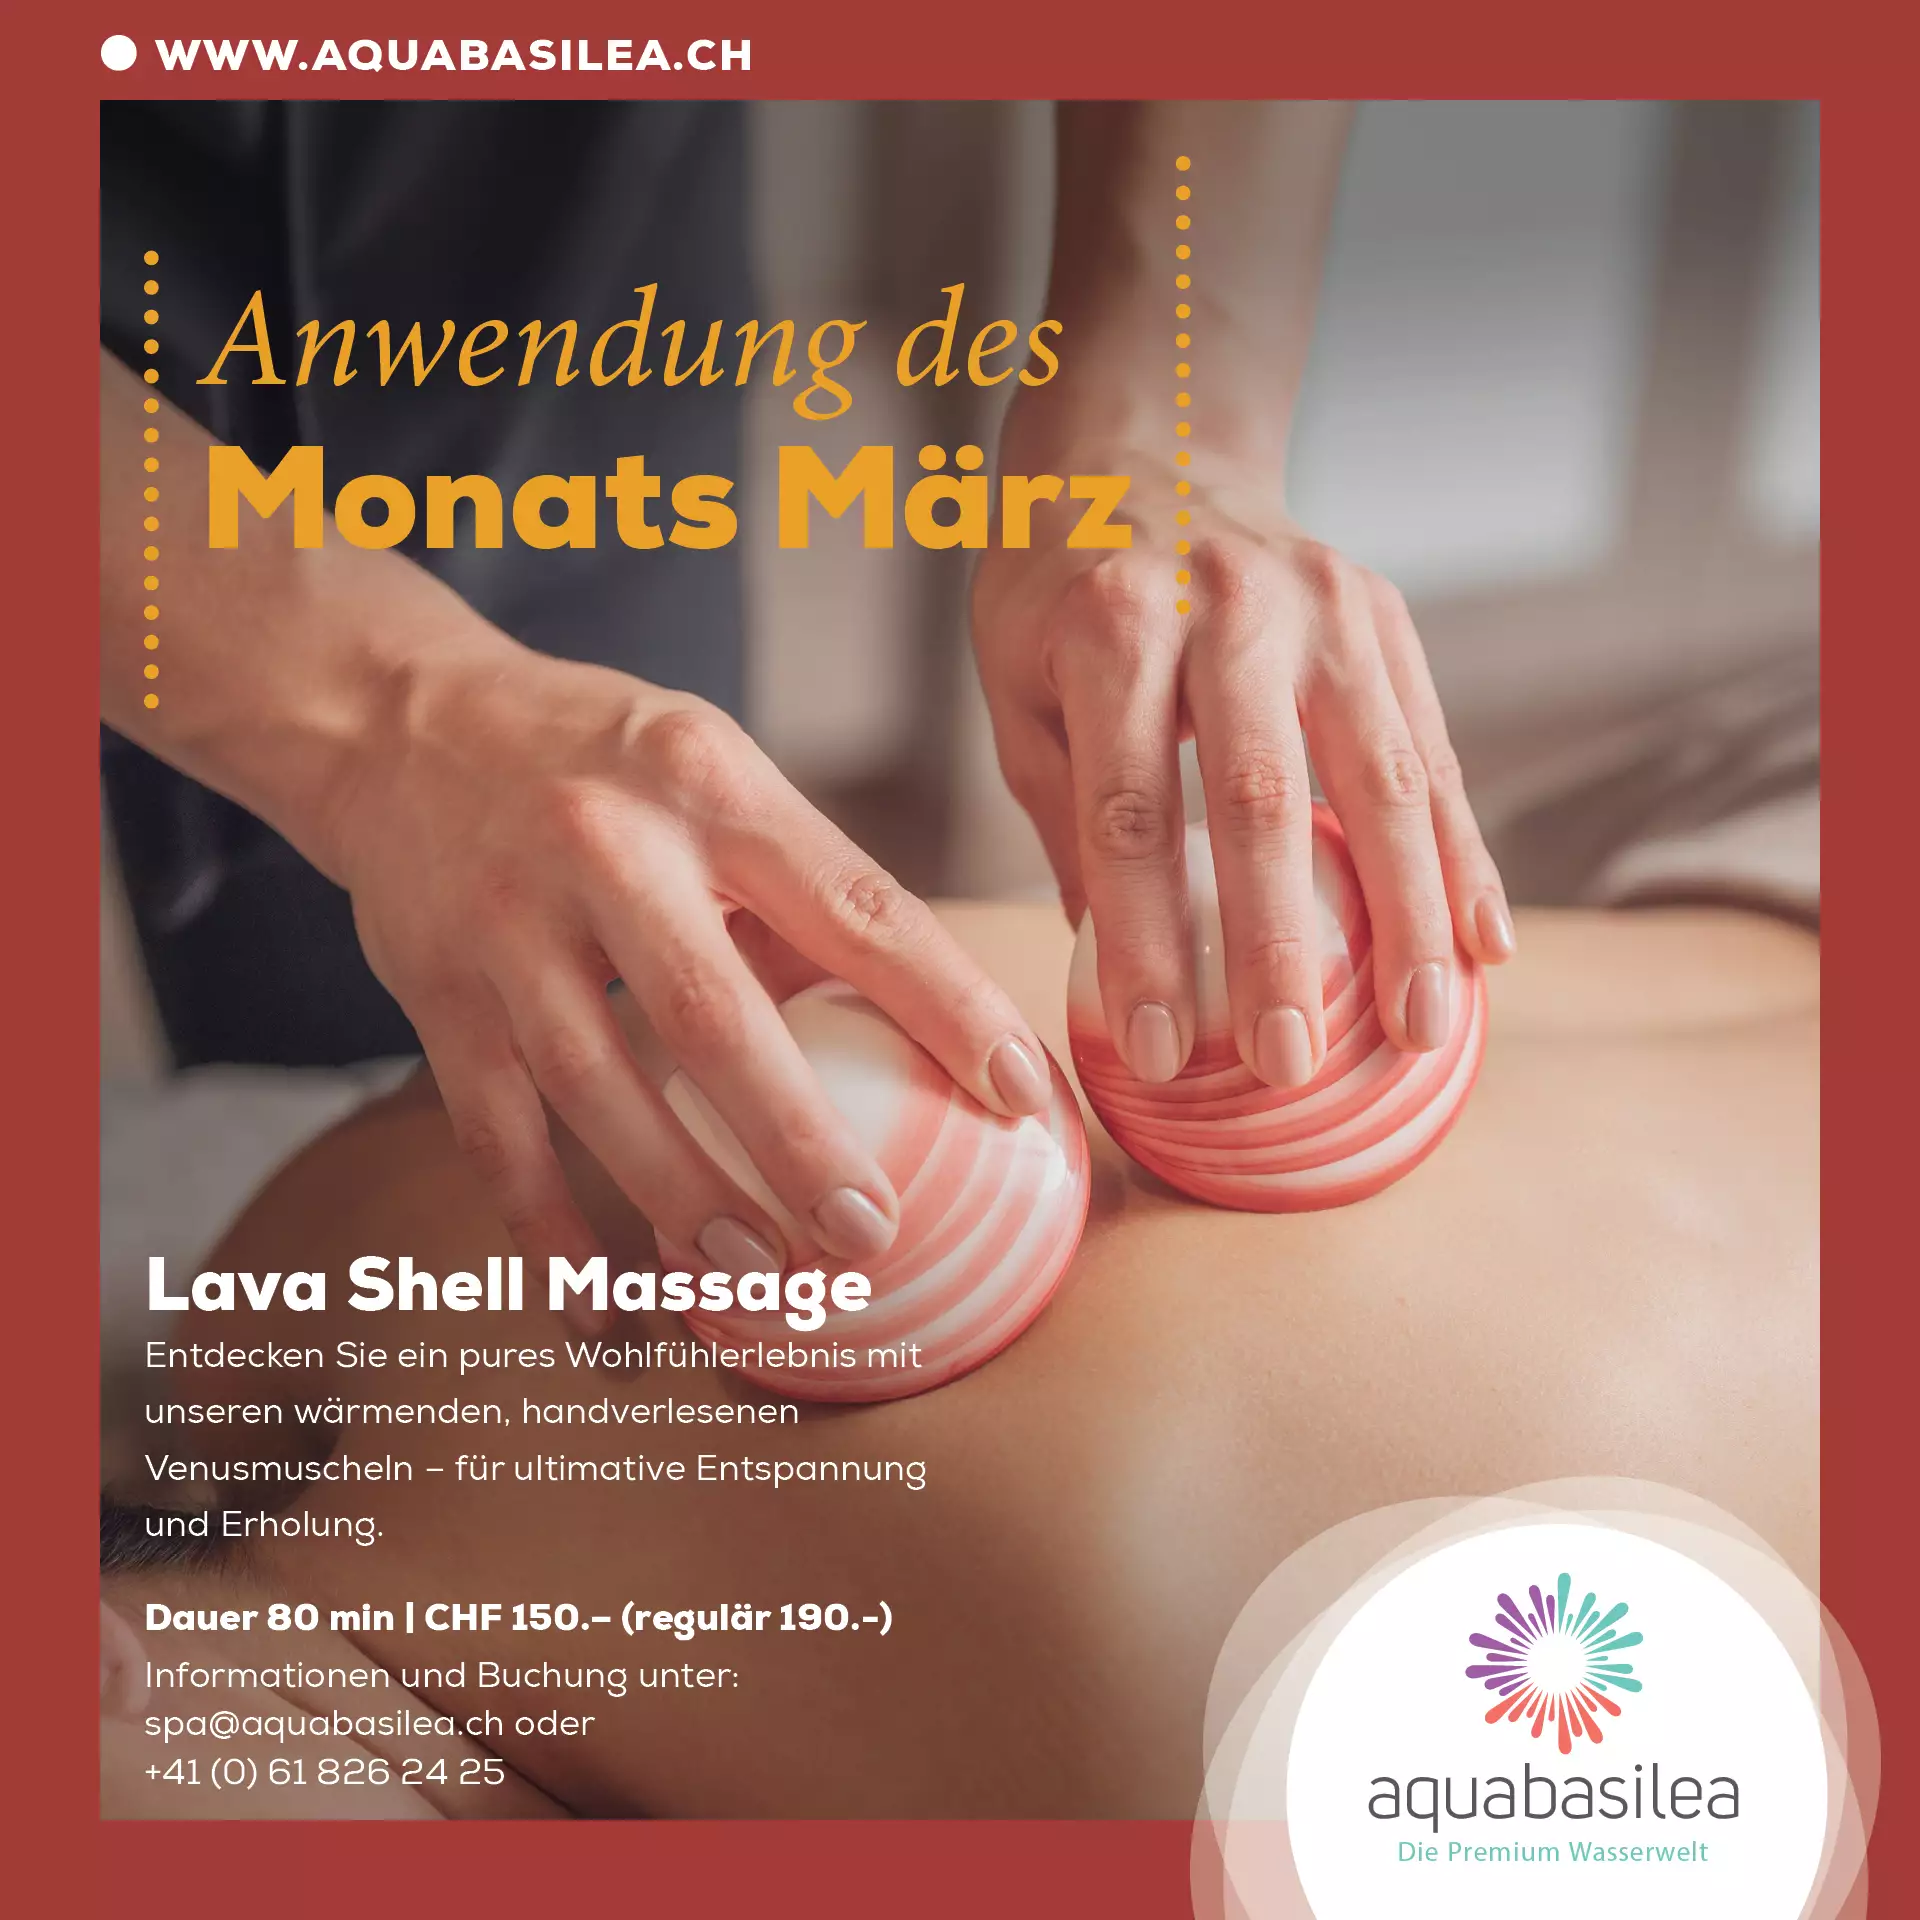 Anwendung des Monats im März - "Lava Shell Massage"